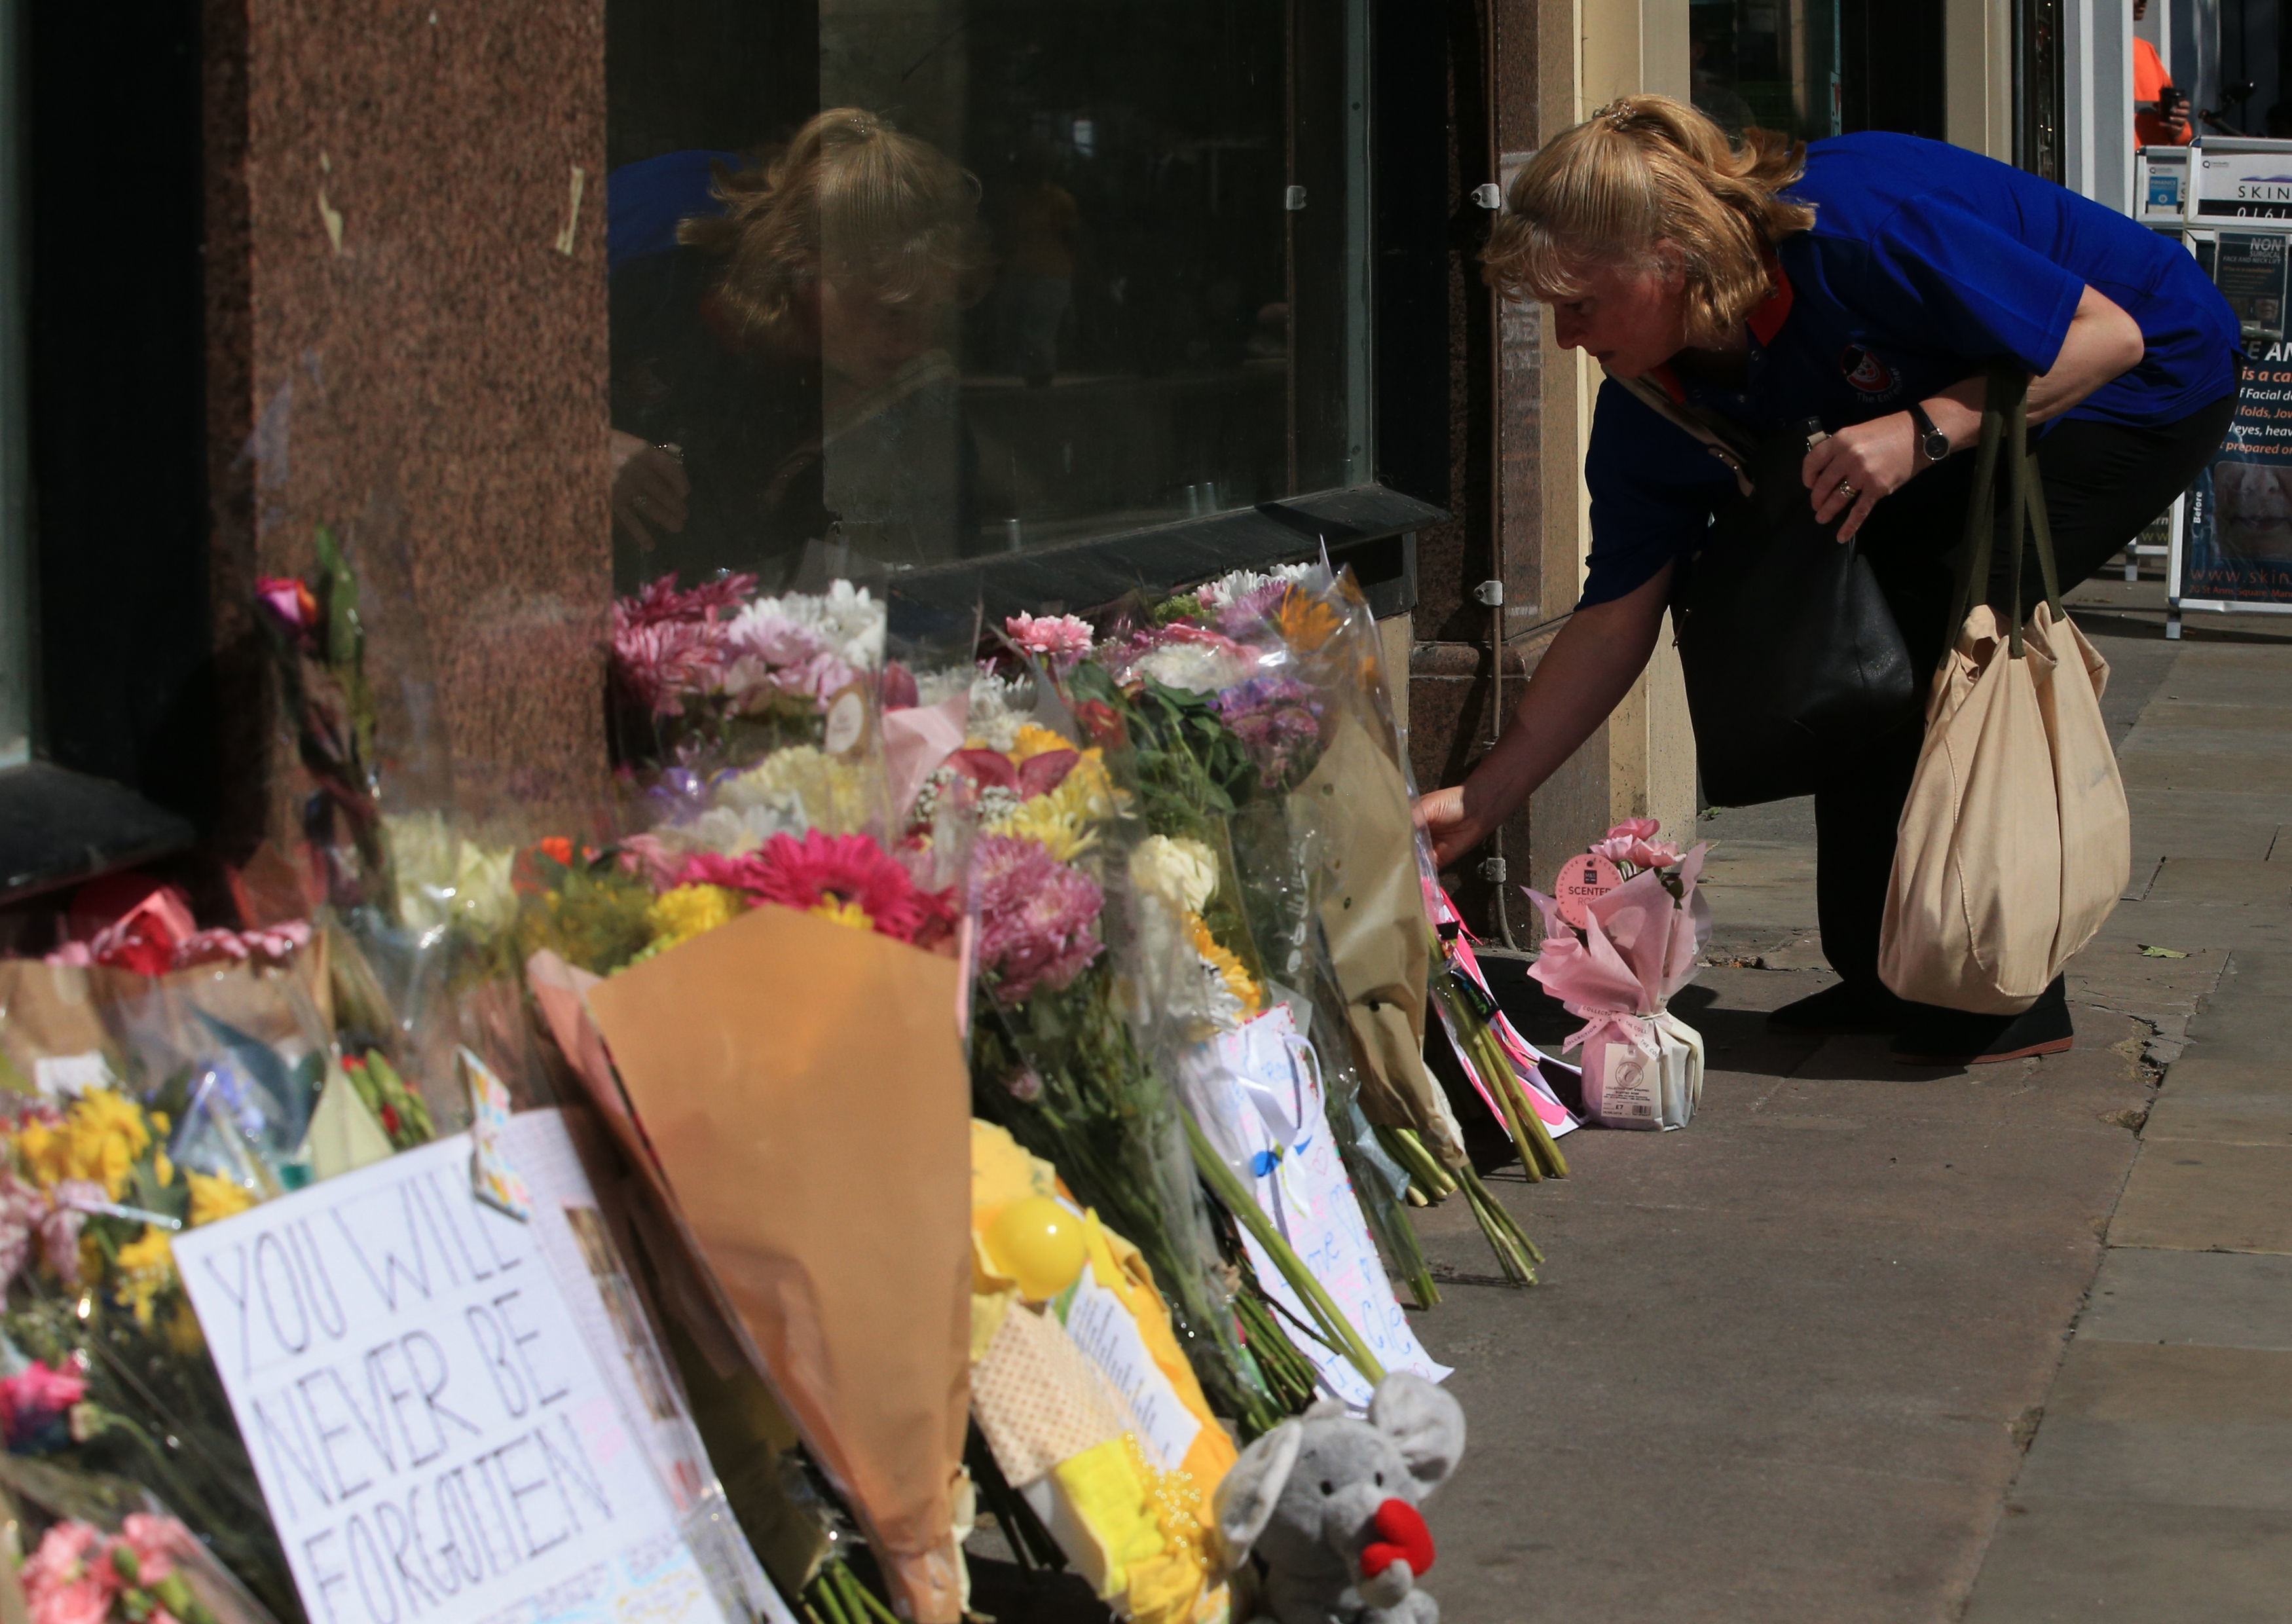 Bells of Manchester Catholic church will ring to mark bombing anniversary 